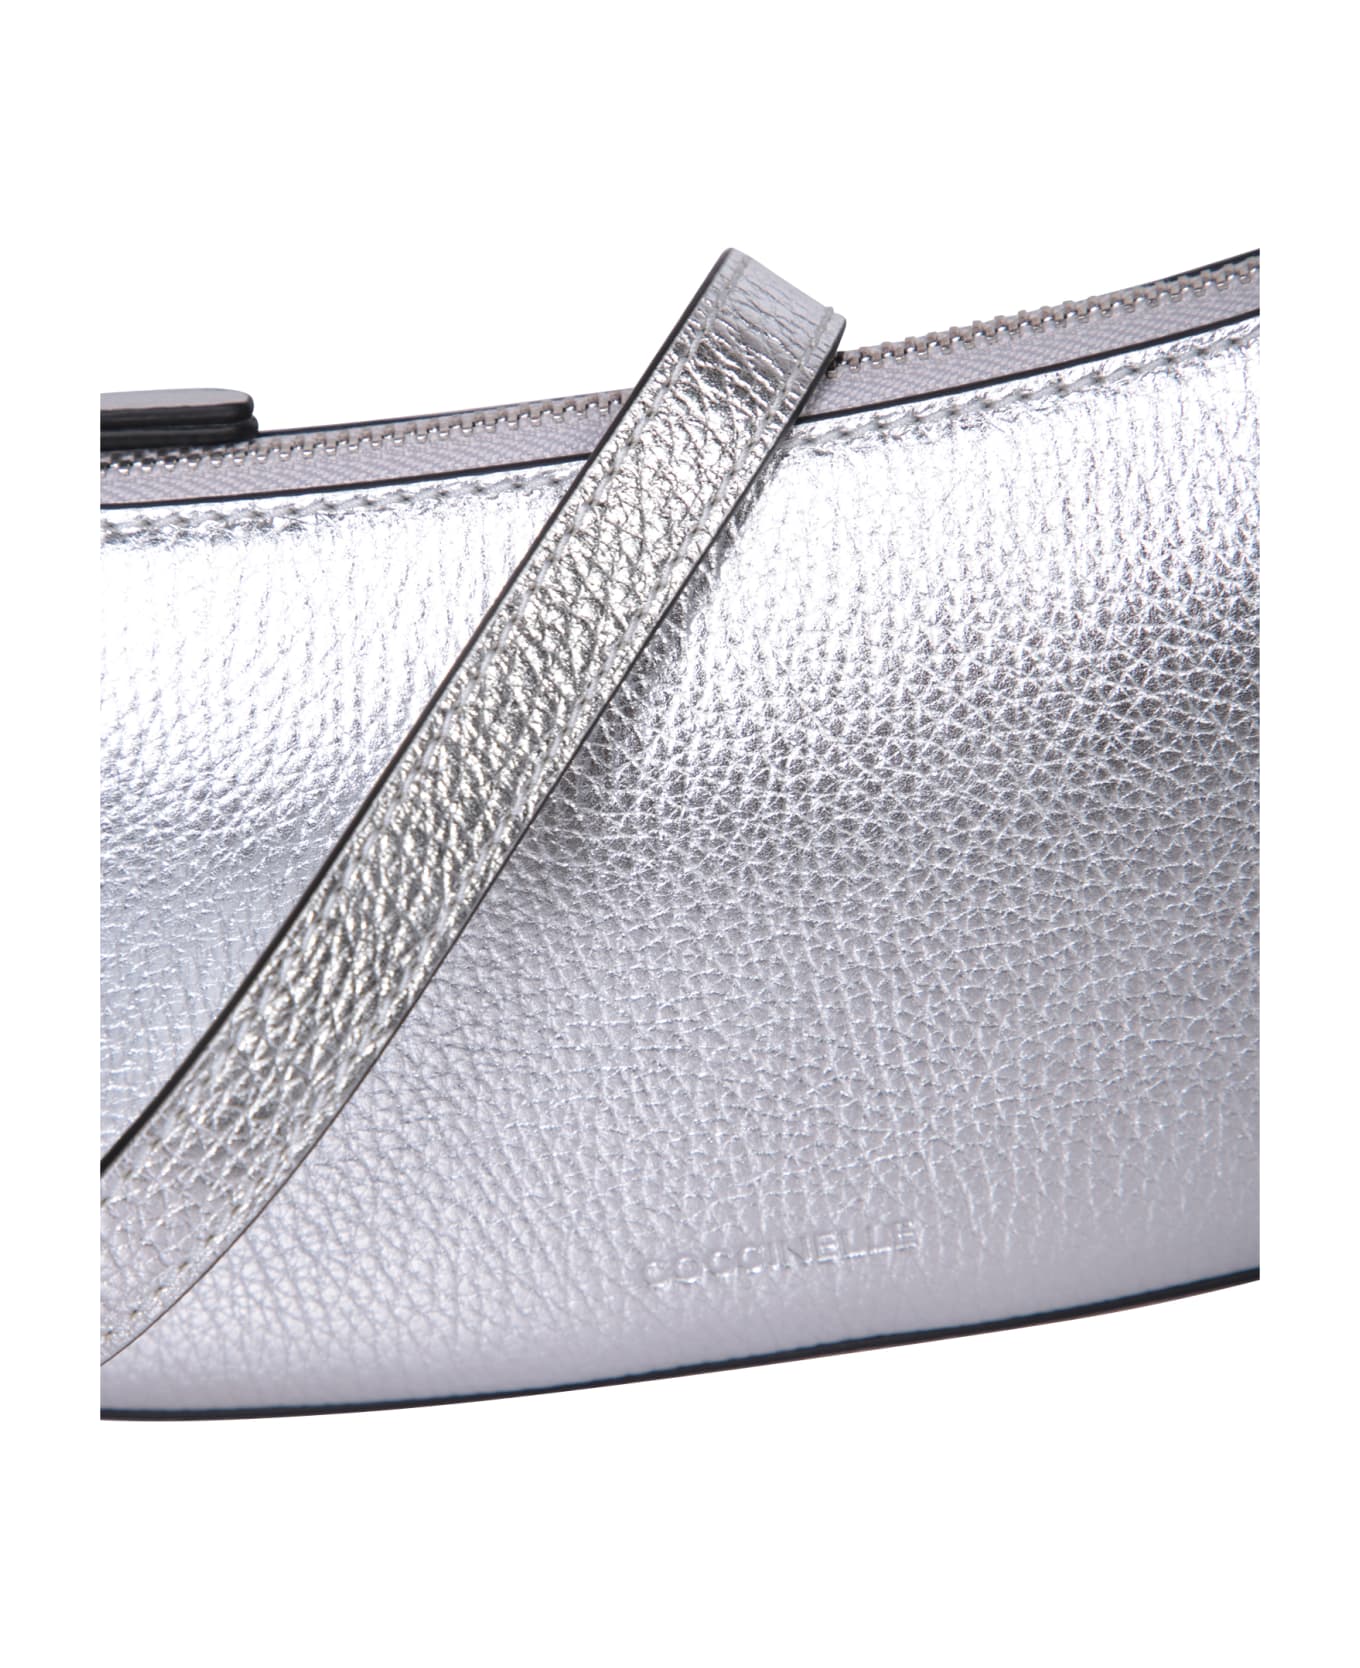 Coccinelle Merveille Silver Bag - Metallic